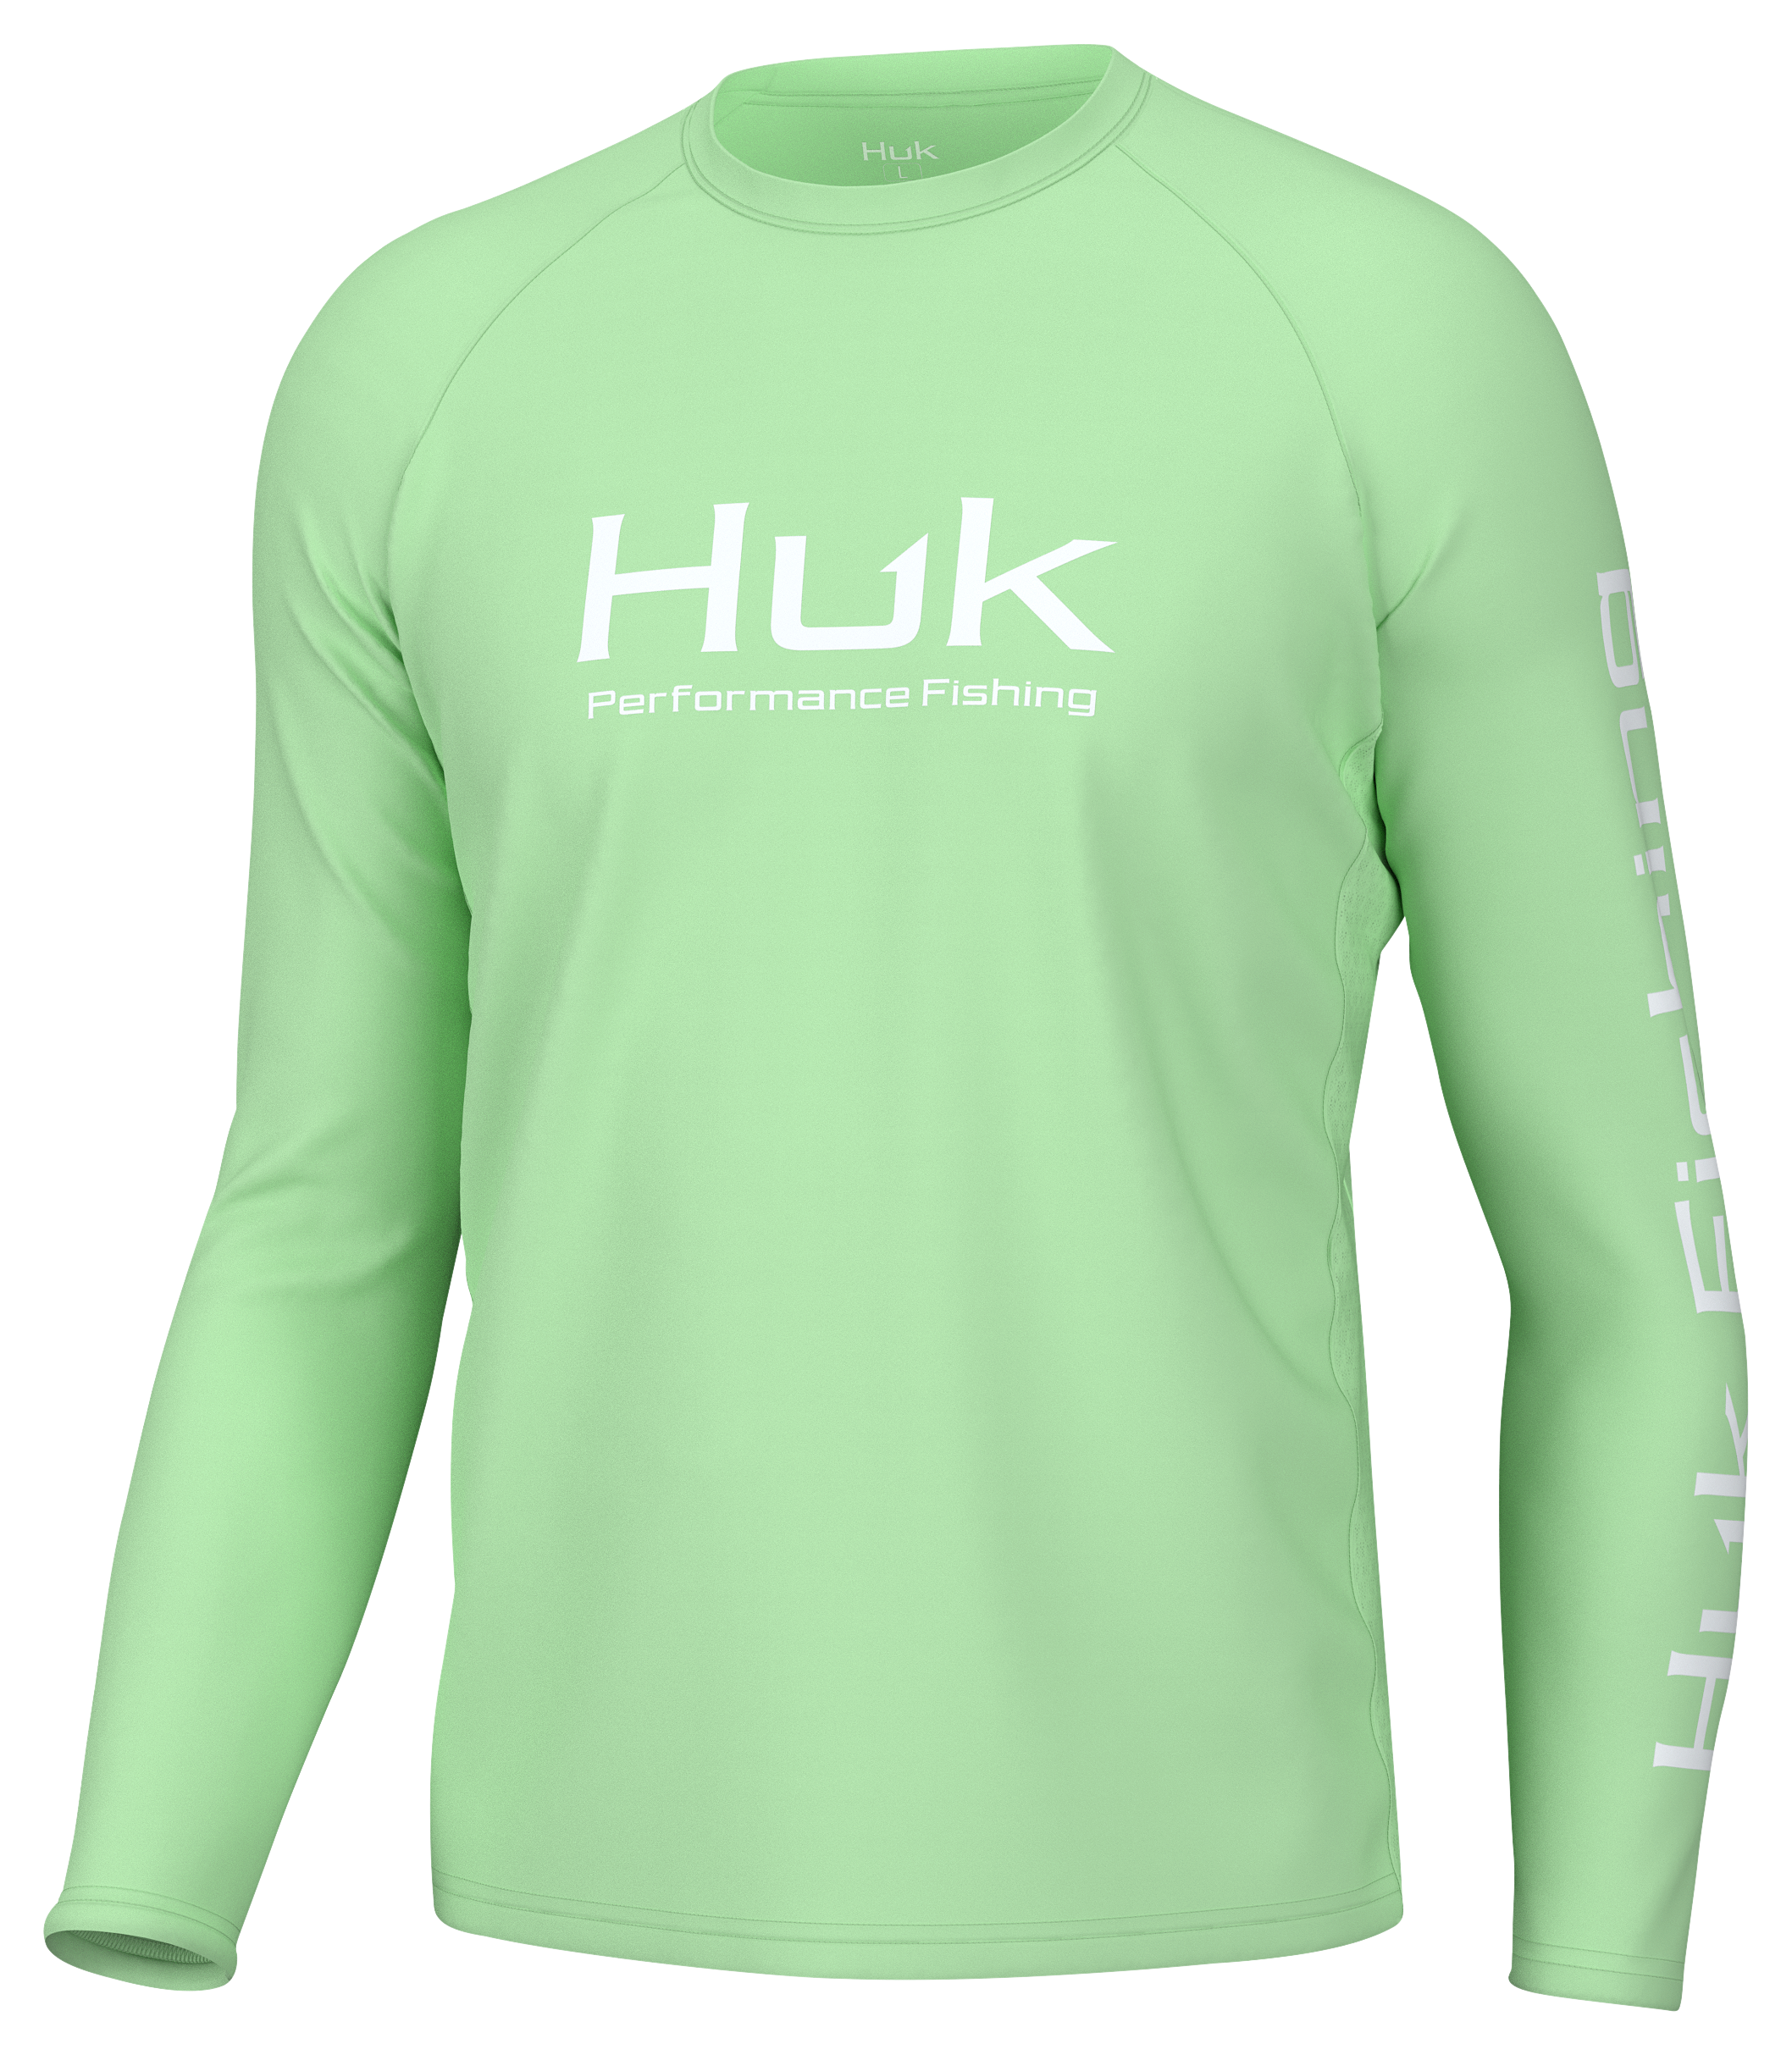 Huk Fin America Fade Pursuit Long Sleeve Shirt, Crystal Blue - H1200505-497